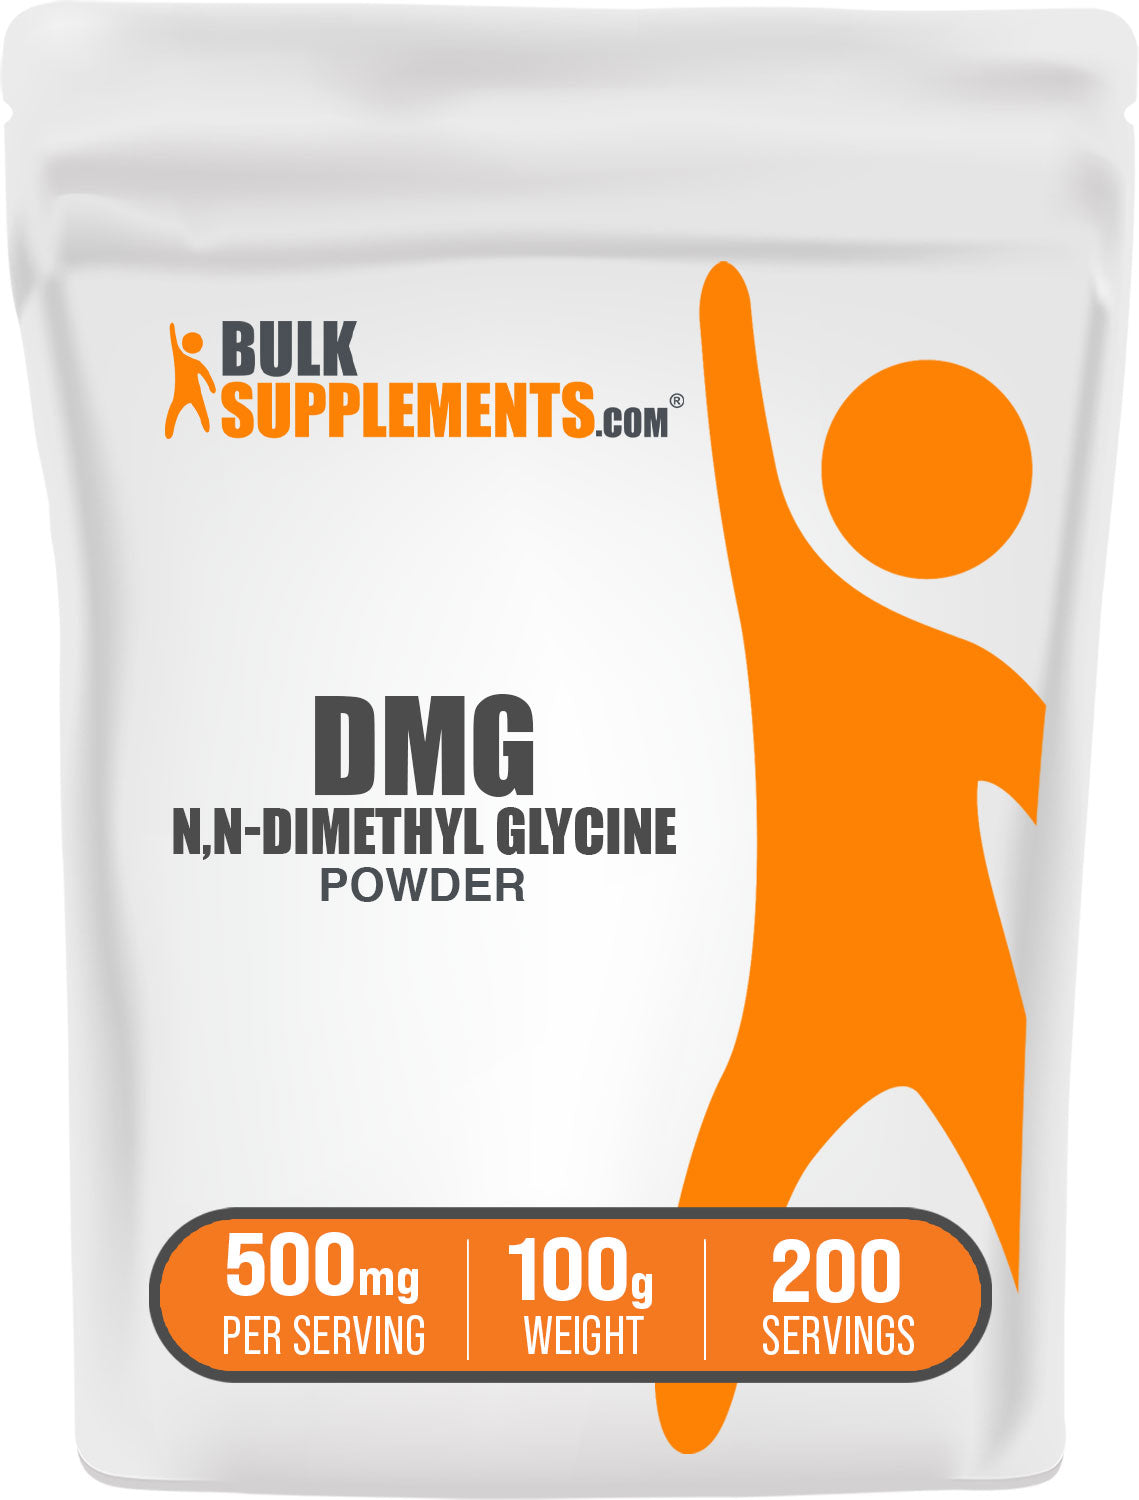 BulkSupplements.com DMG HCl powder 100g bag image